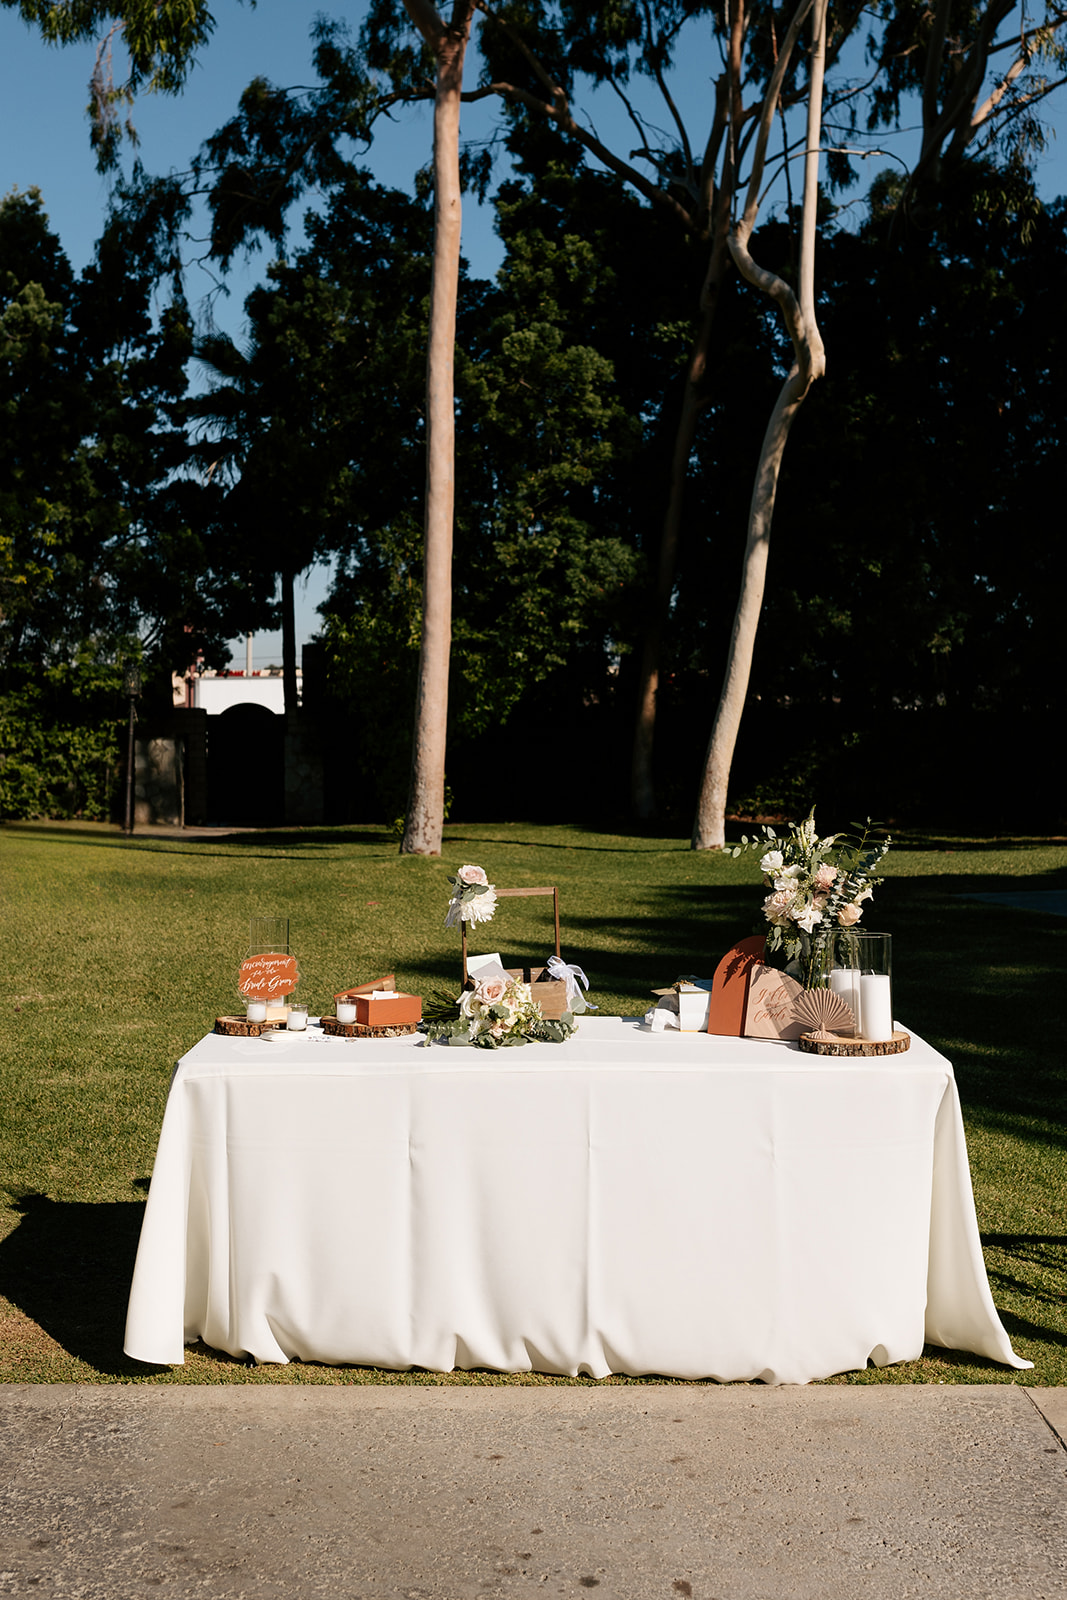 griffith house wedding anaheim california wooden wedding arch reception seating arrangement idea outdoor reception socal